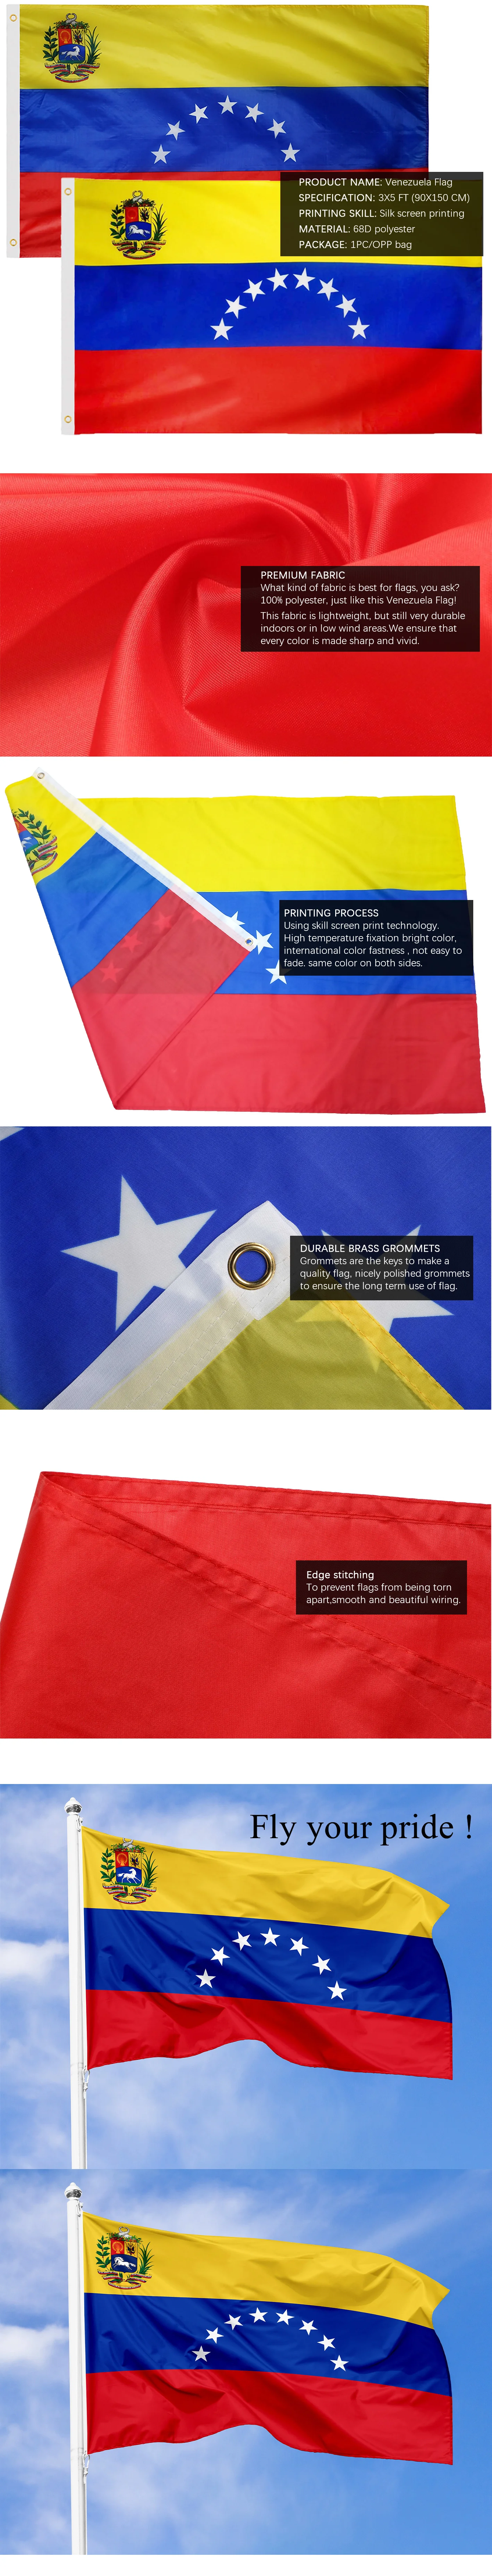 South America 100% Polyester With Eyelets Venezuela 8 Stars Flag 5 x 3 FT